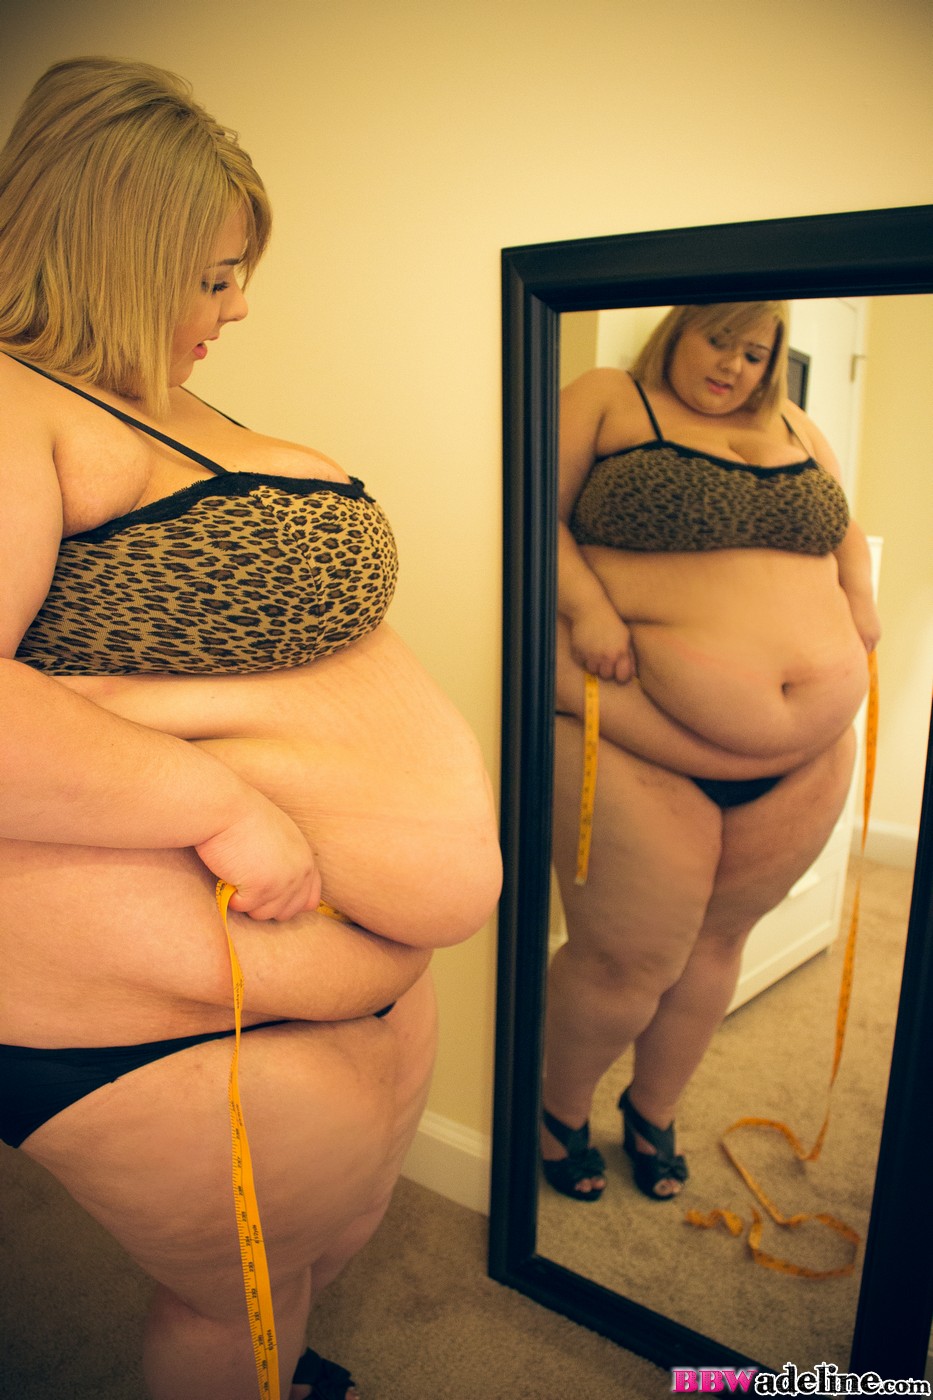 Big belly weight gain